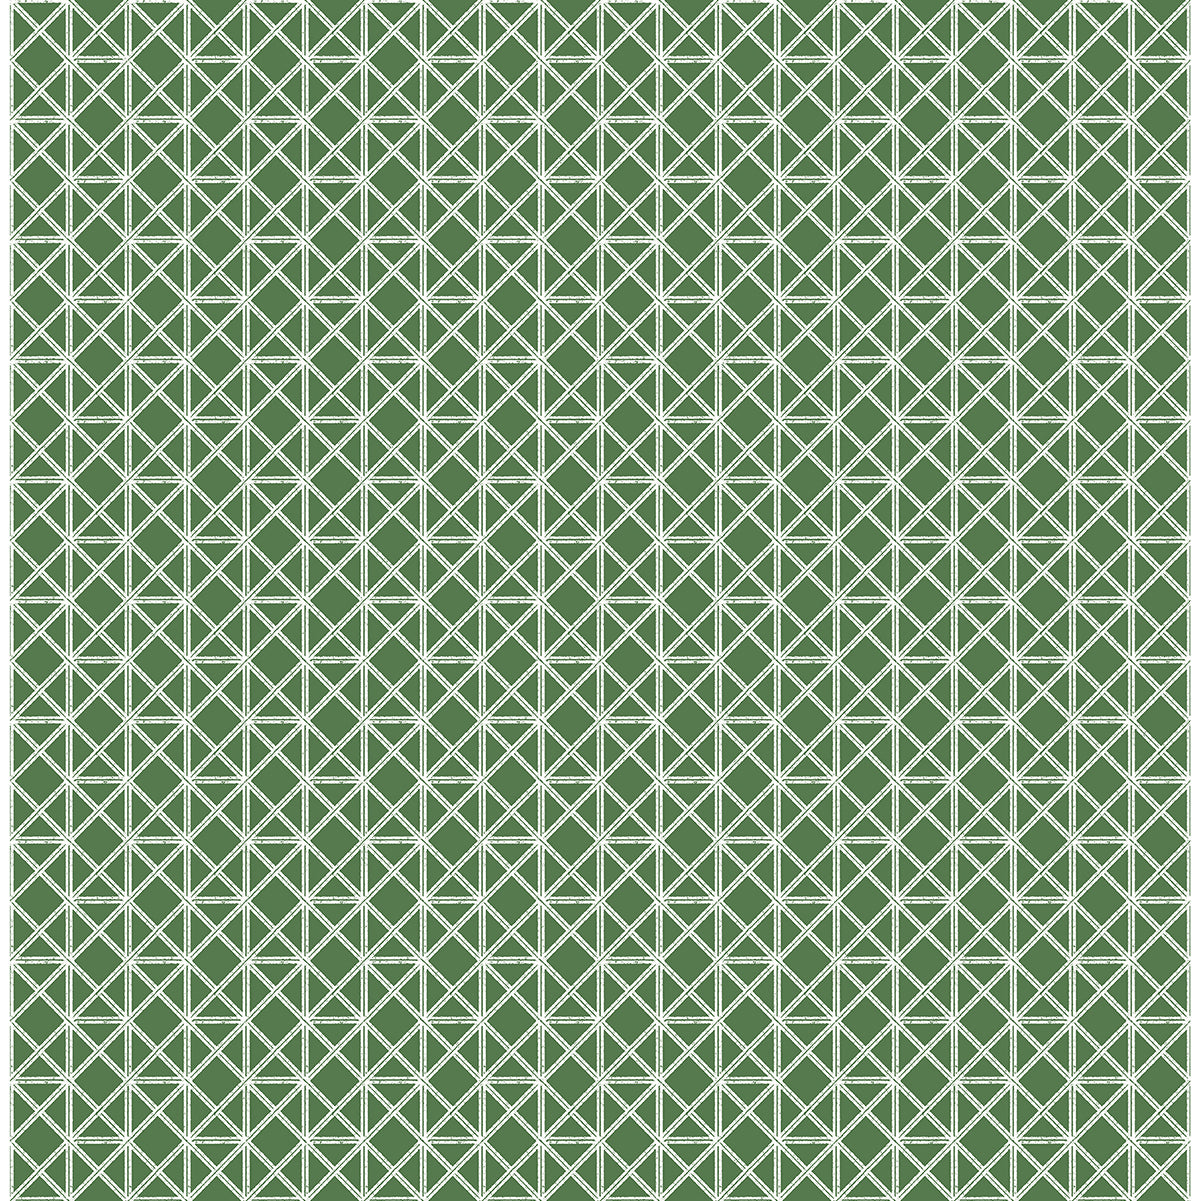 Picture of Lisbeth Green Geometric Lattice Wallpaper